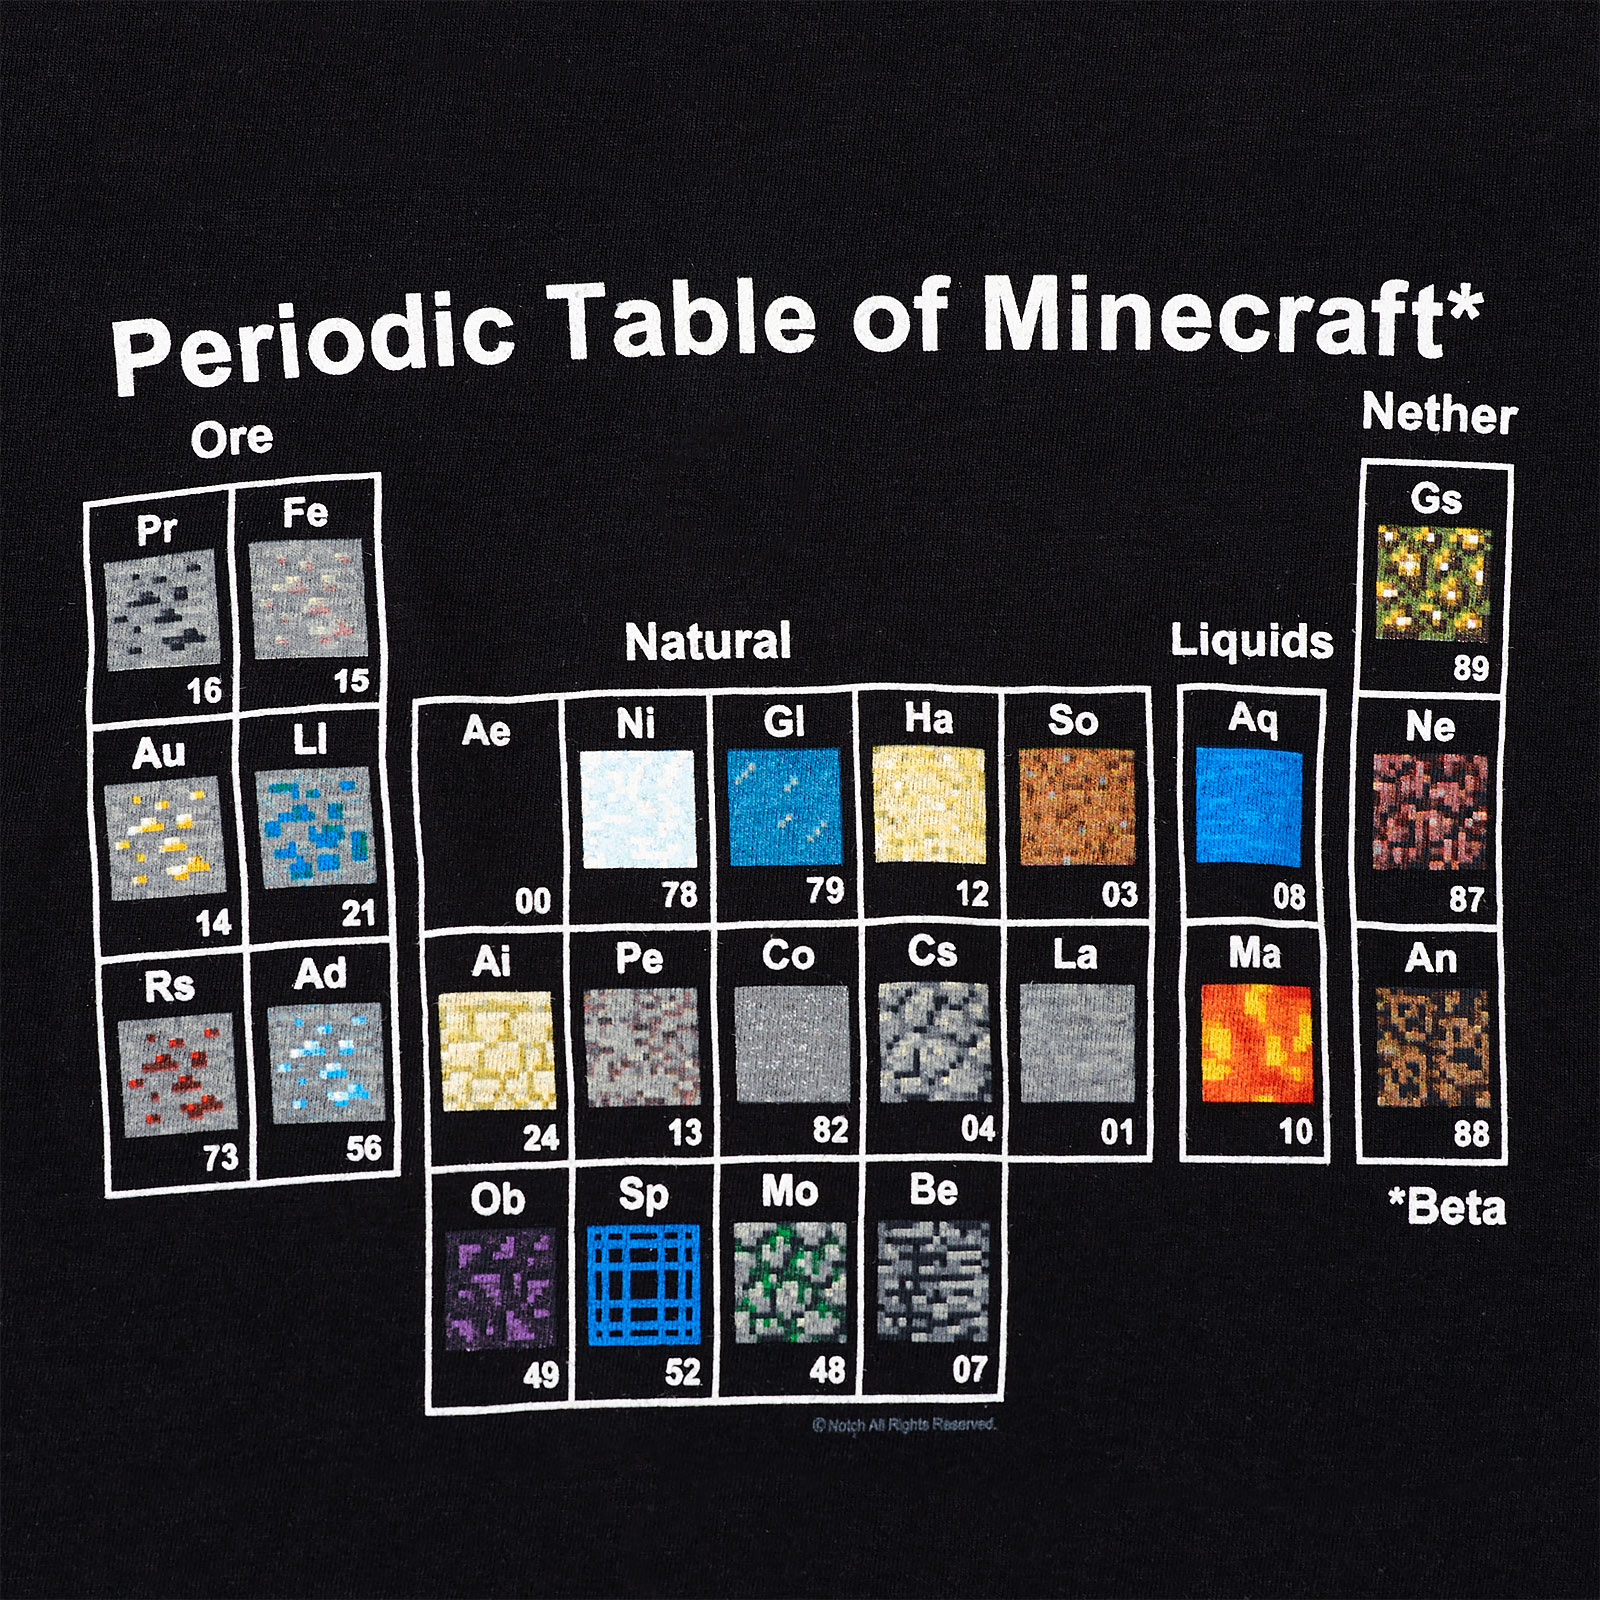 Minecraft - Periodic Table T-Shirt Women